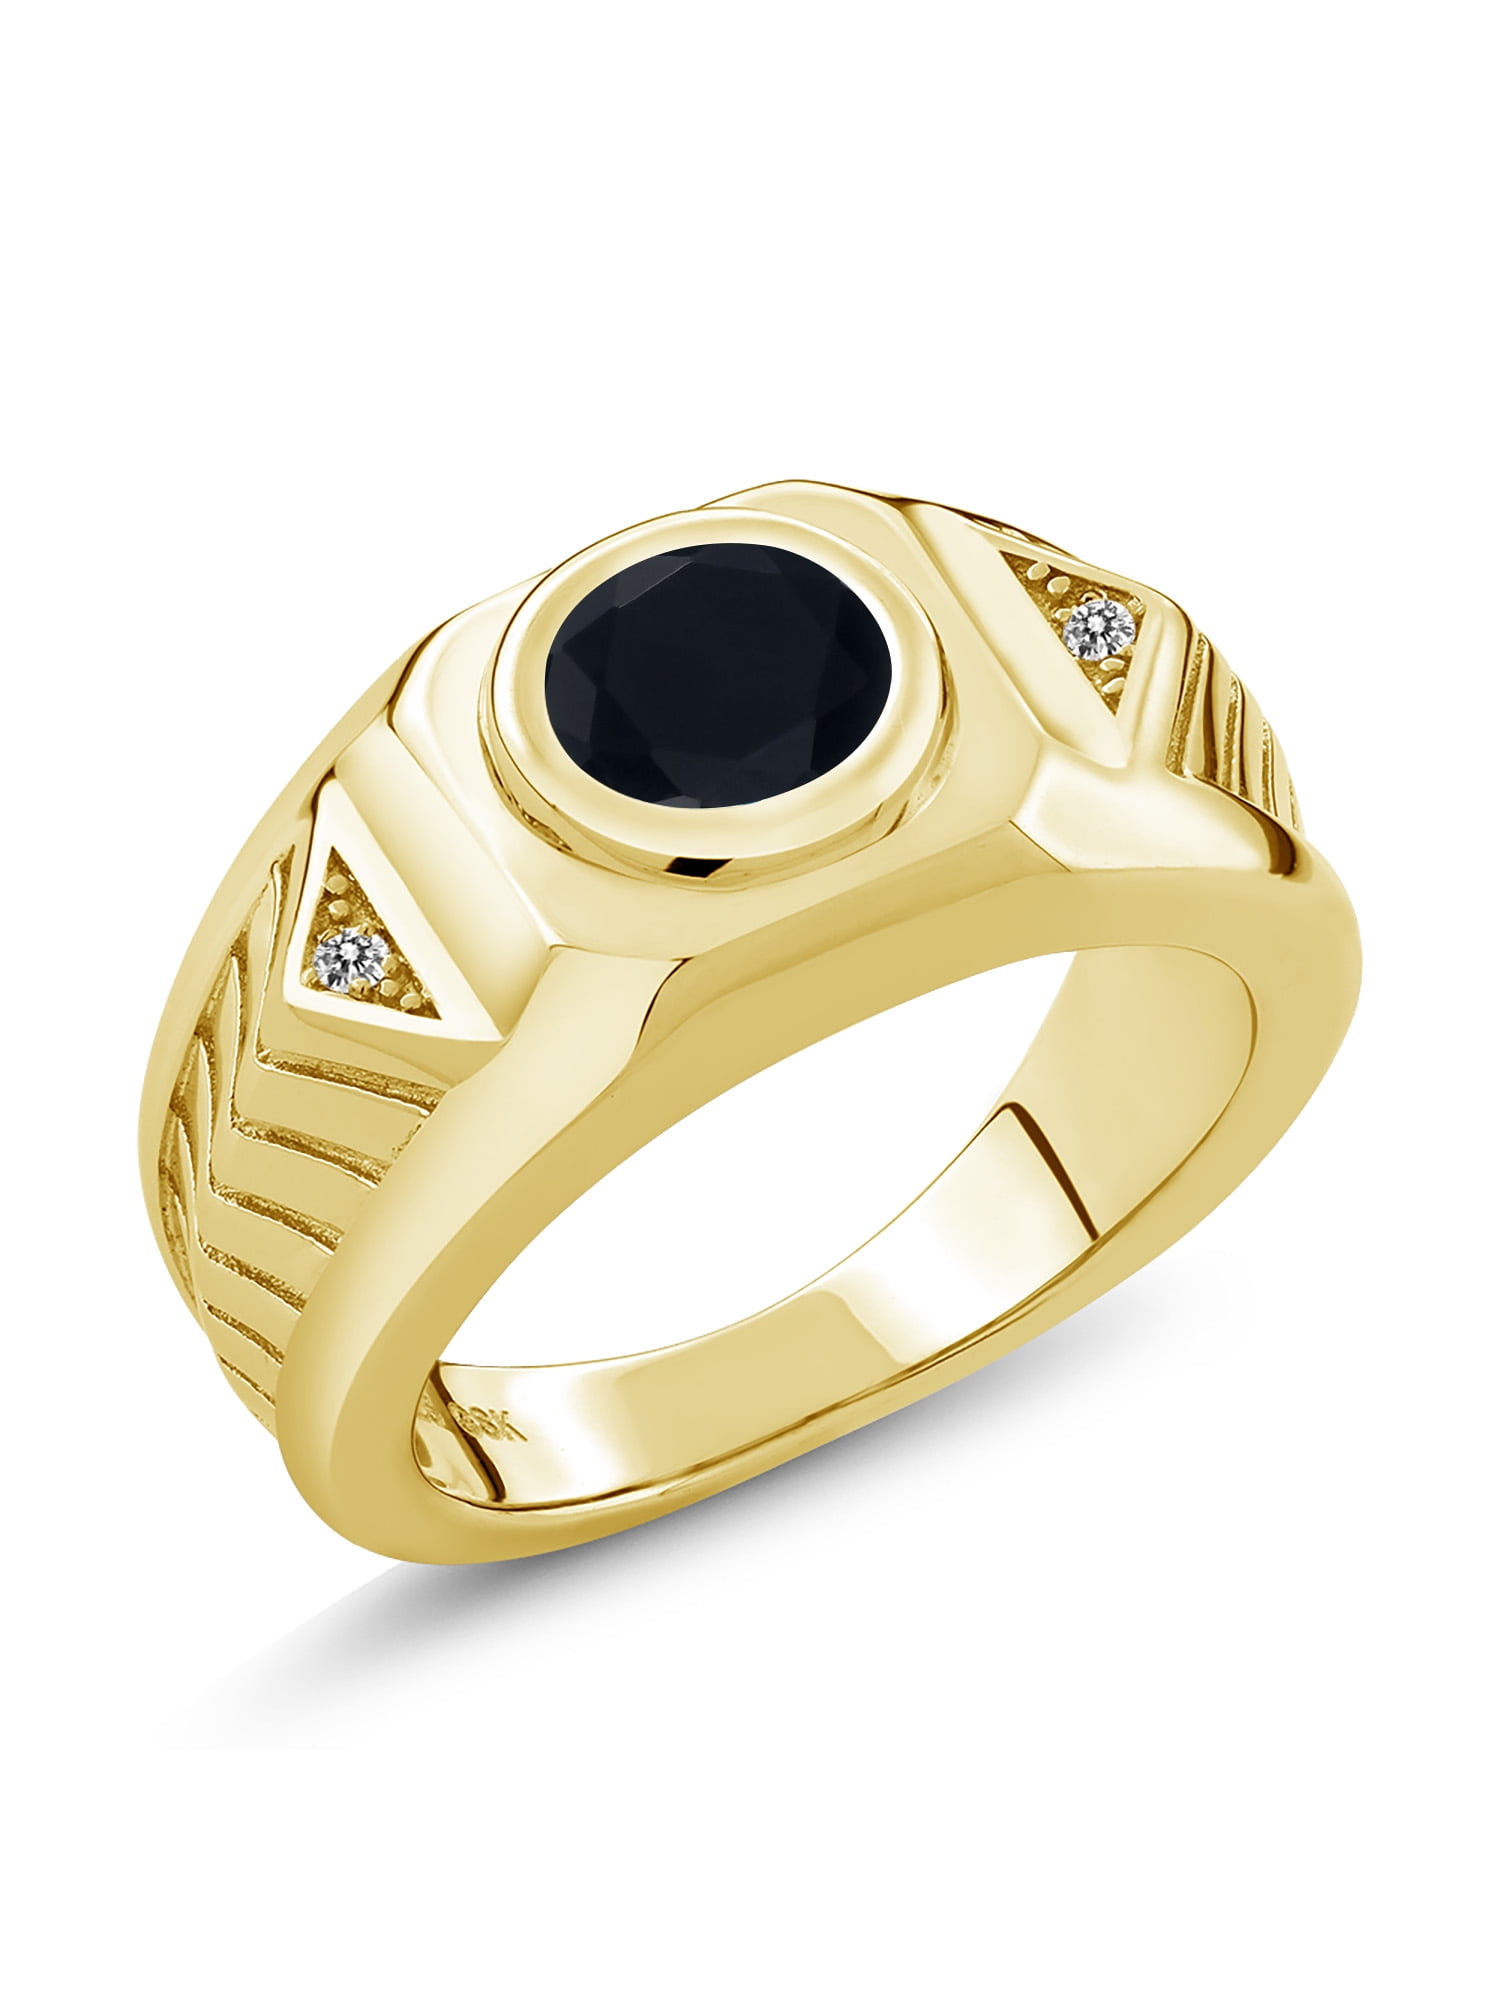 Gem Stone King 1.50 Ct Princess Black Onyx 18K Yellow Gold Plated Silver Mens Ring